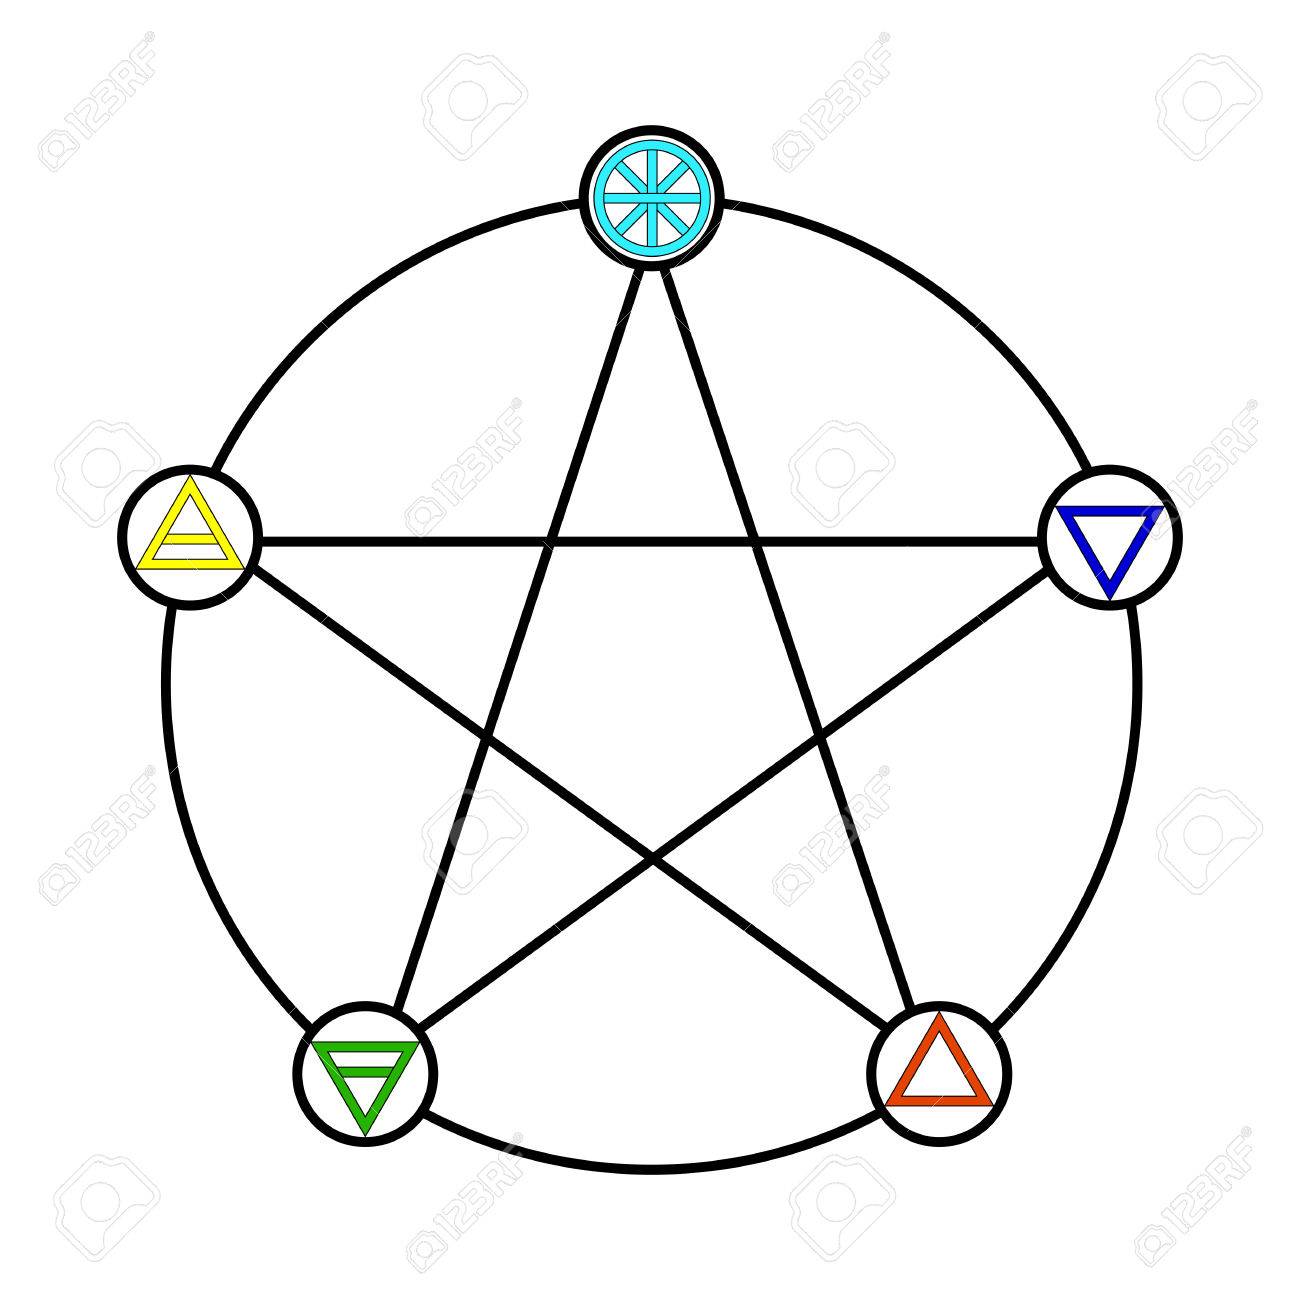 69232199-pentagram-with-five-elements-icon-symbol-design-.jpg